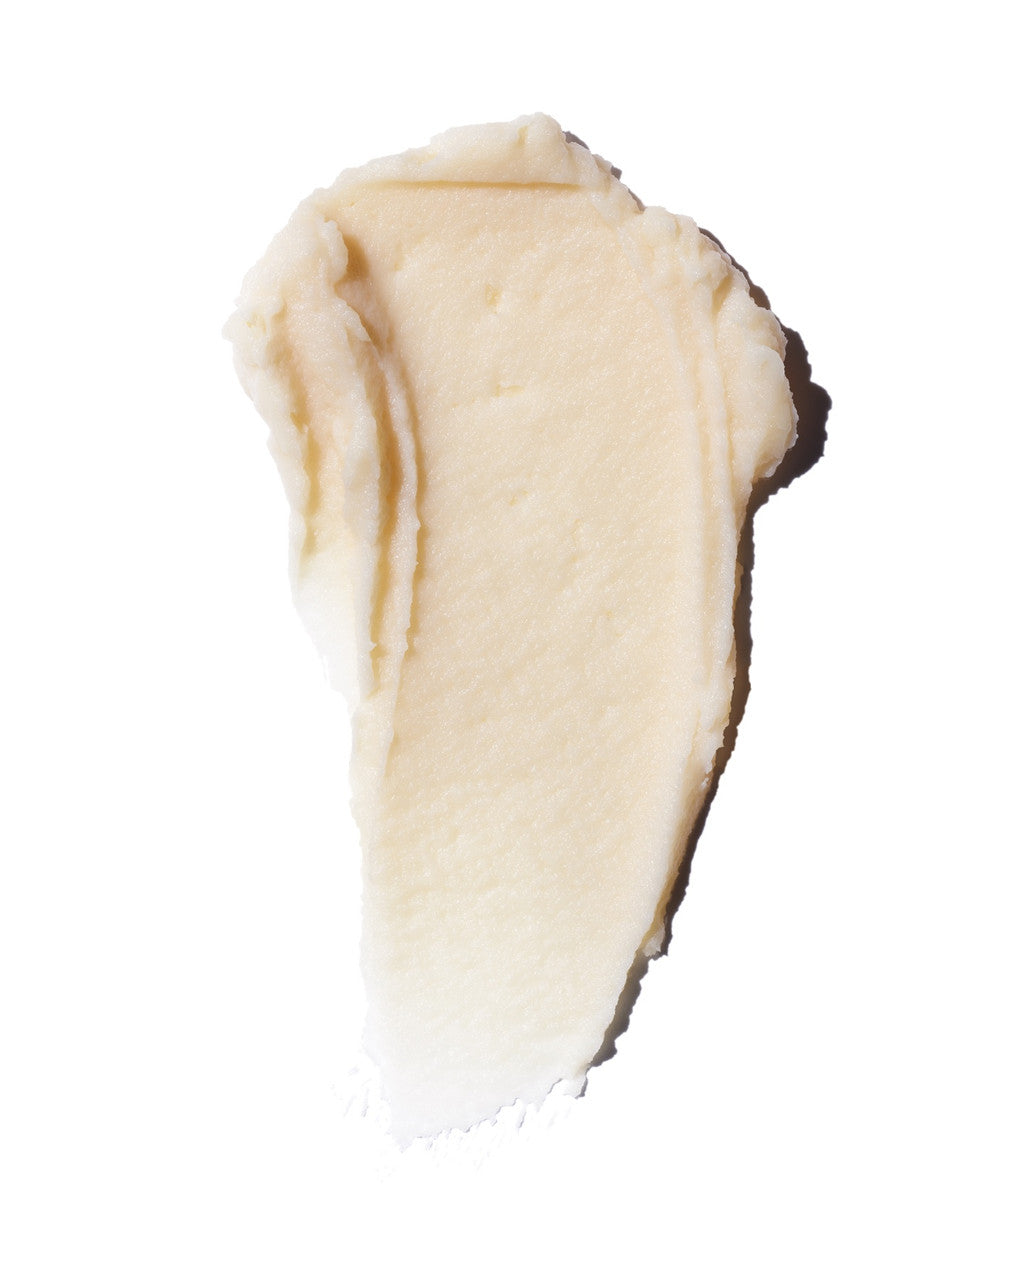 Daily Defense Colloidal Oatmeal Cream - Texture